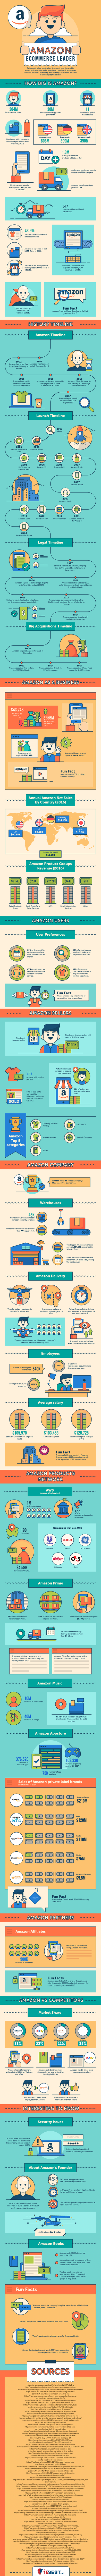 Amazon eCommerce Infographic